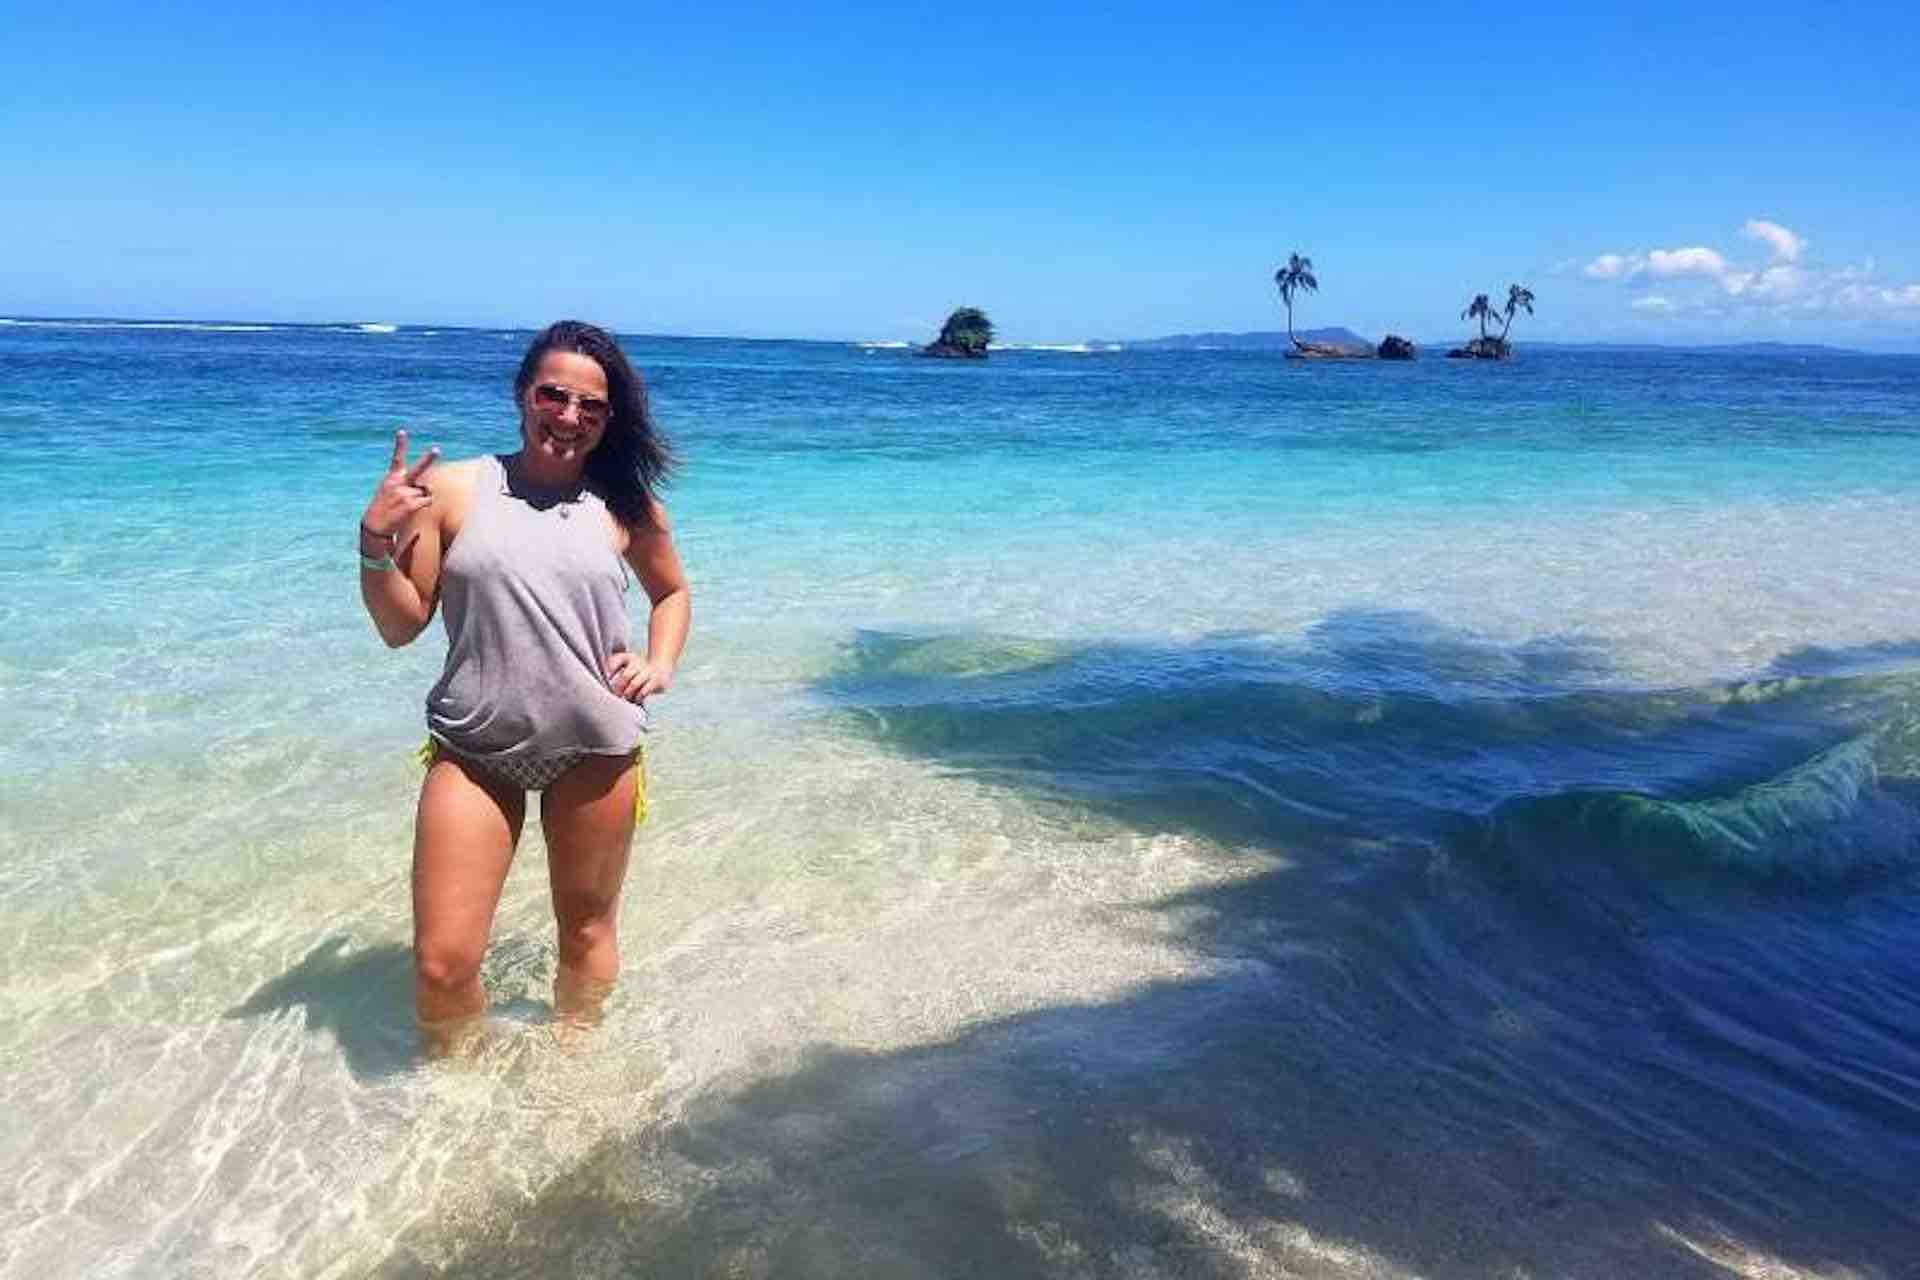 bocas del toro zapatilla island hopping tour woman standing on beach